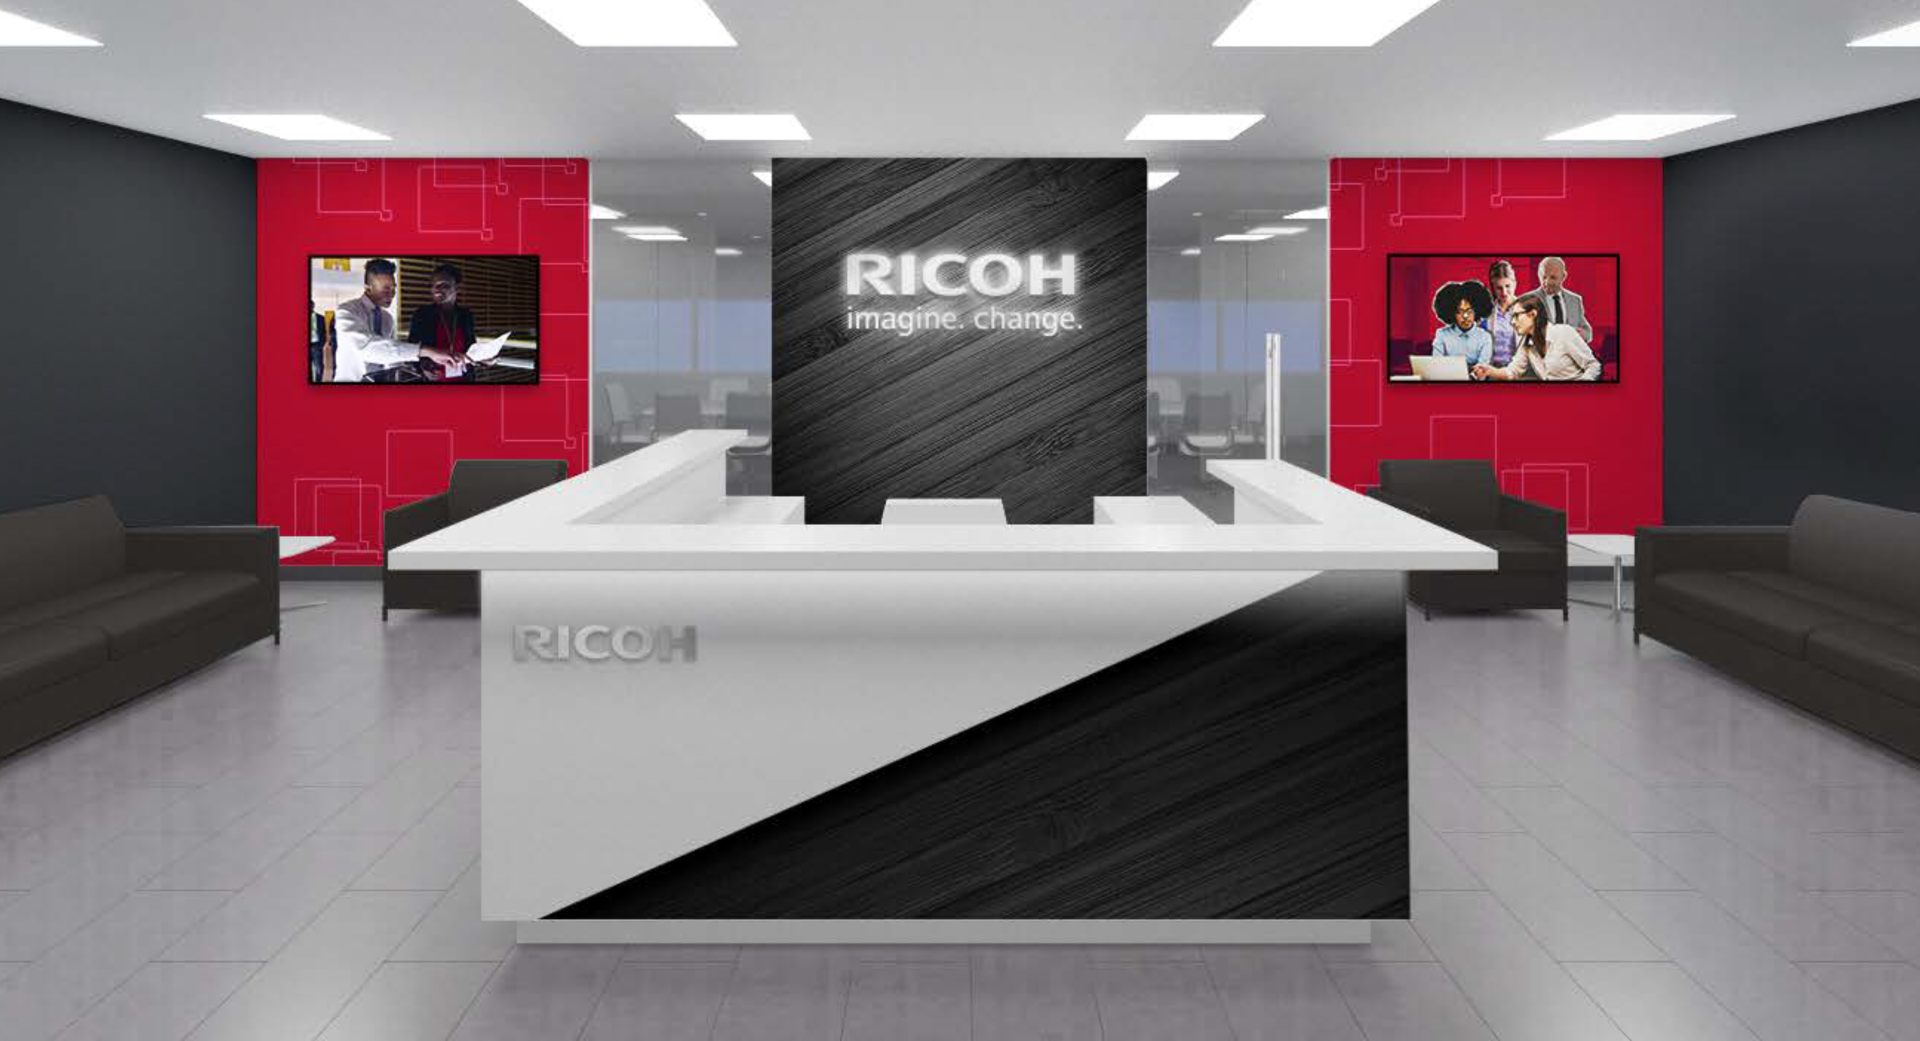 New Ricoh Headquarters Opens in Exton, Pennsylvania